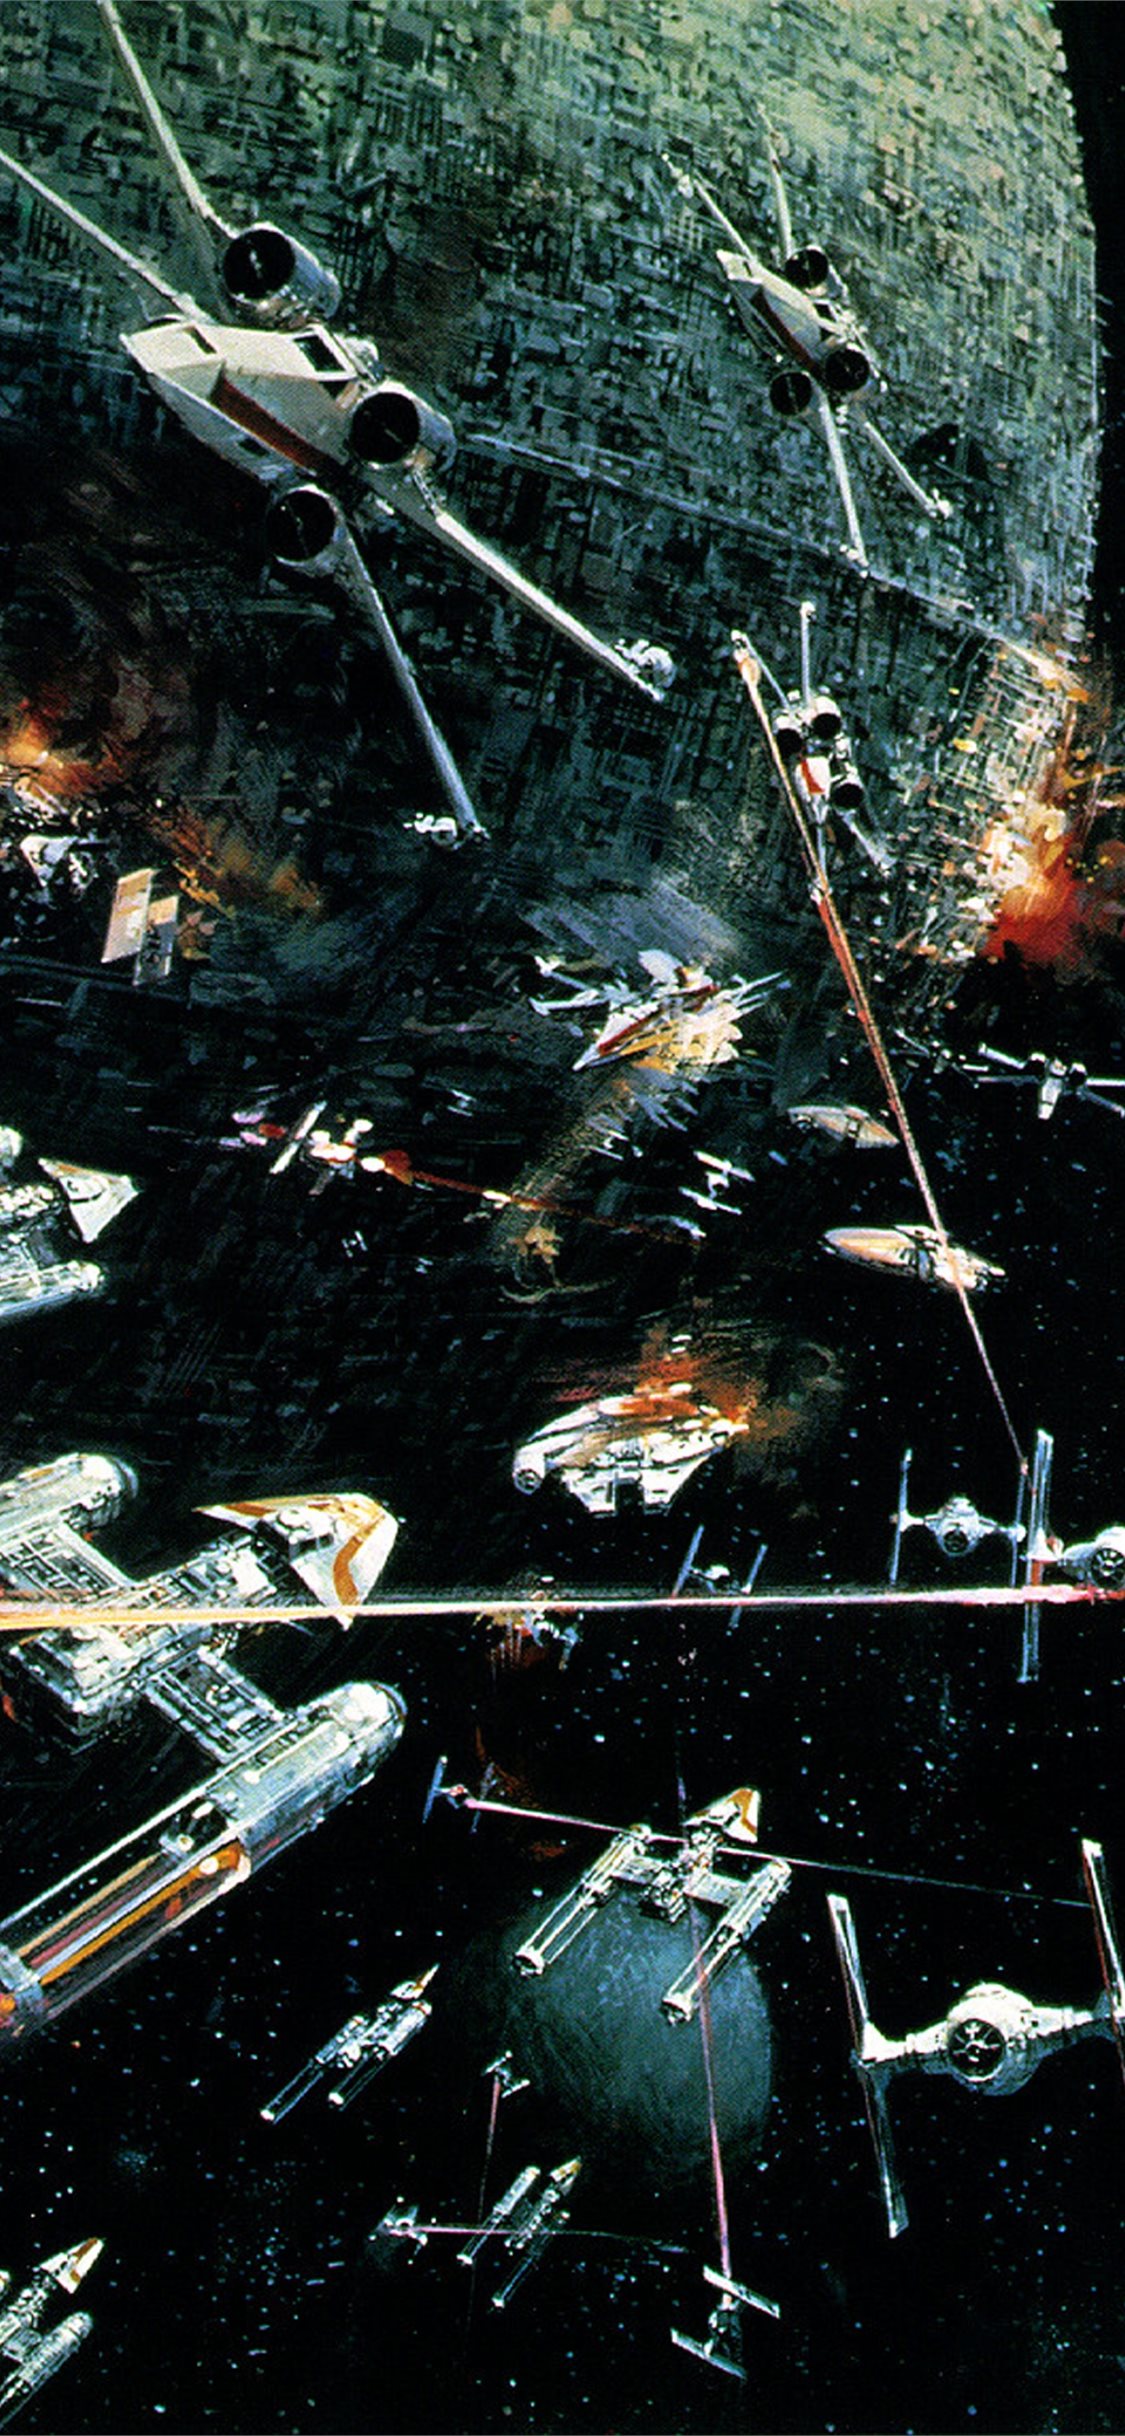 star wars movies fighter tie spaceships millenium. iPhone Wallpaper Free Download